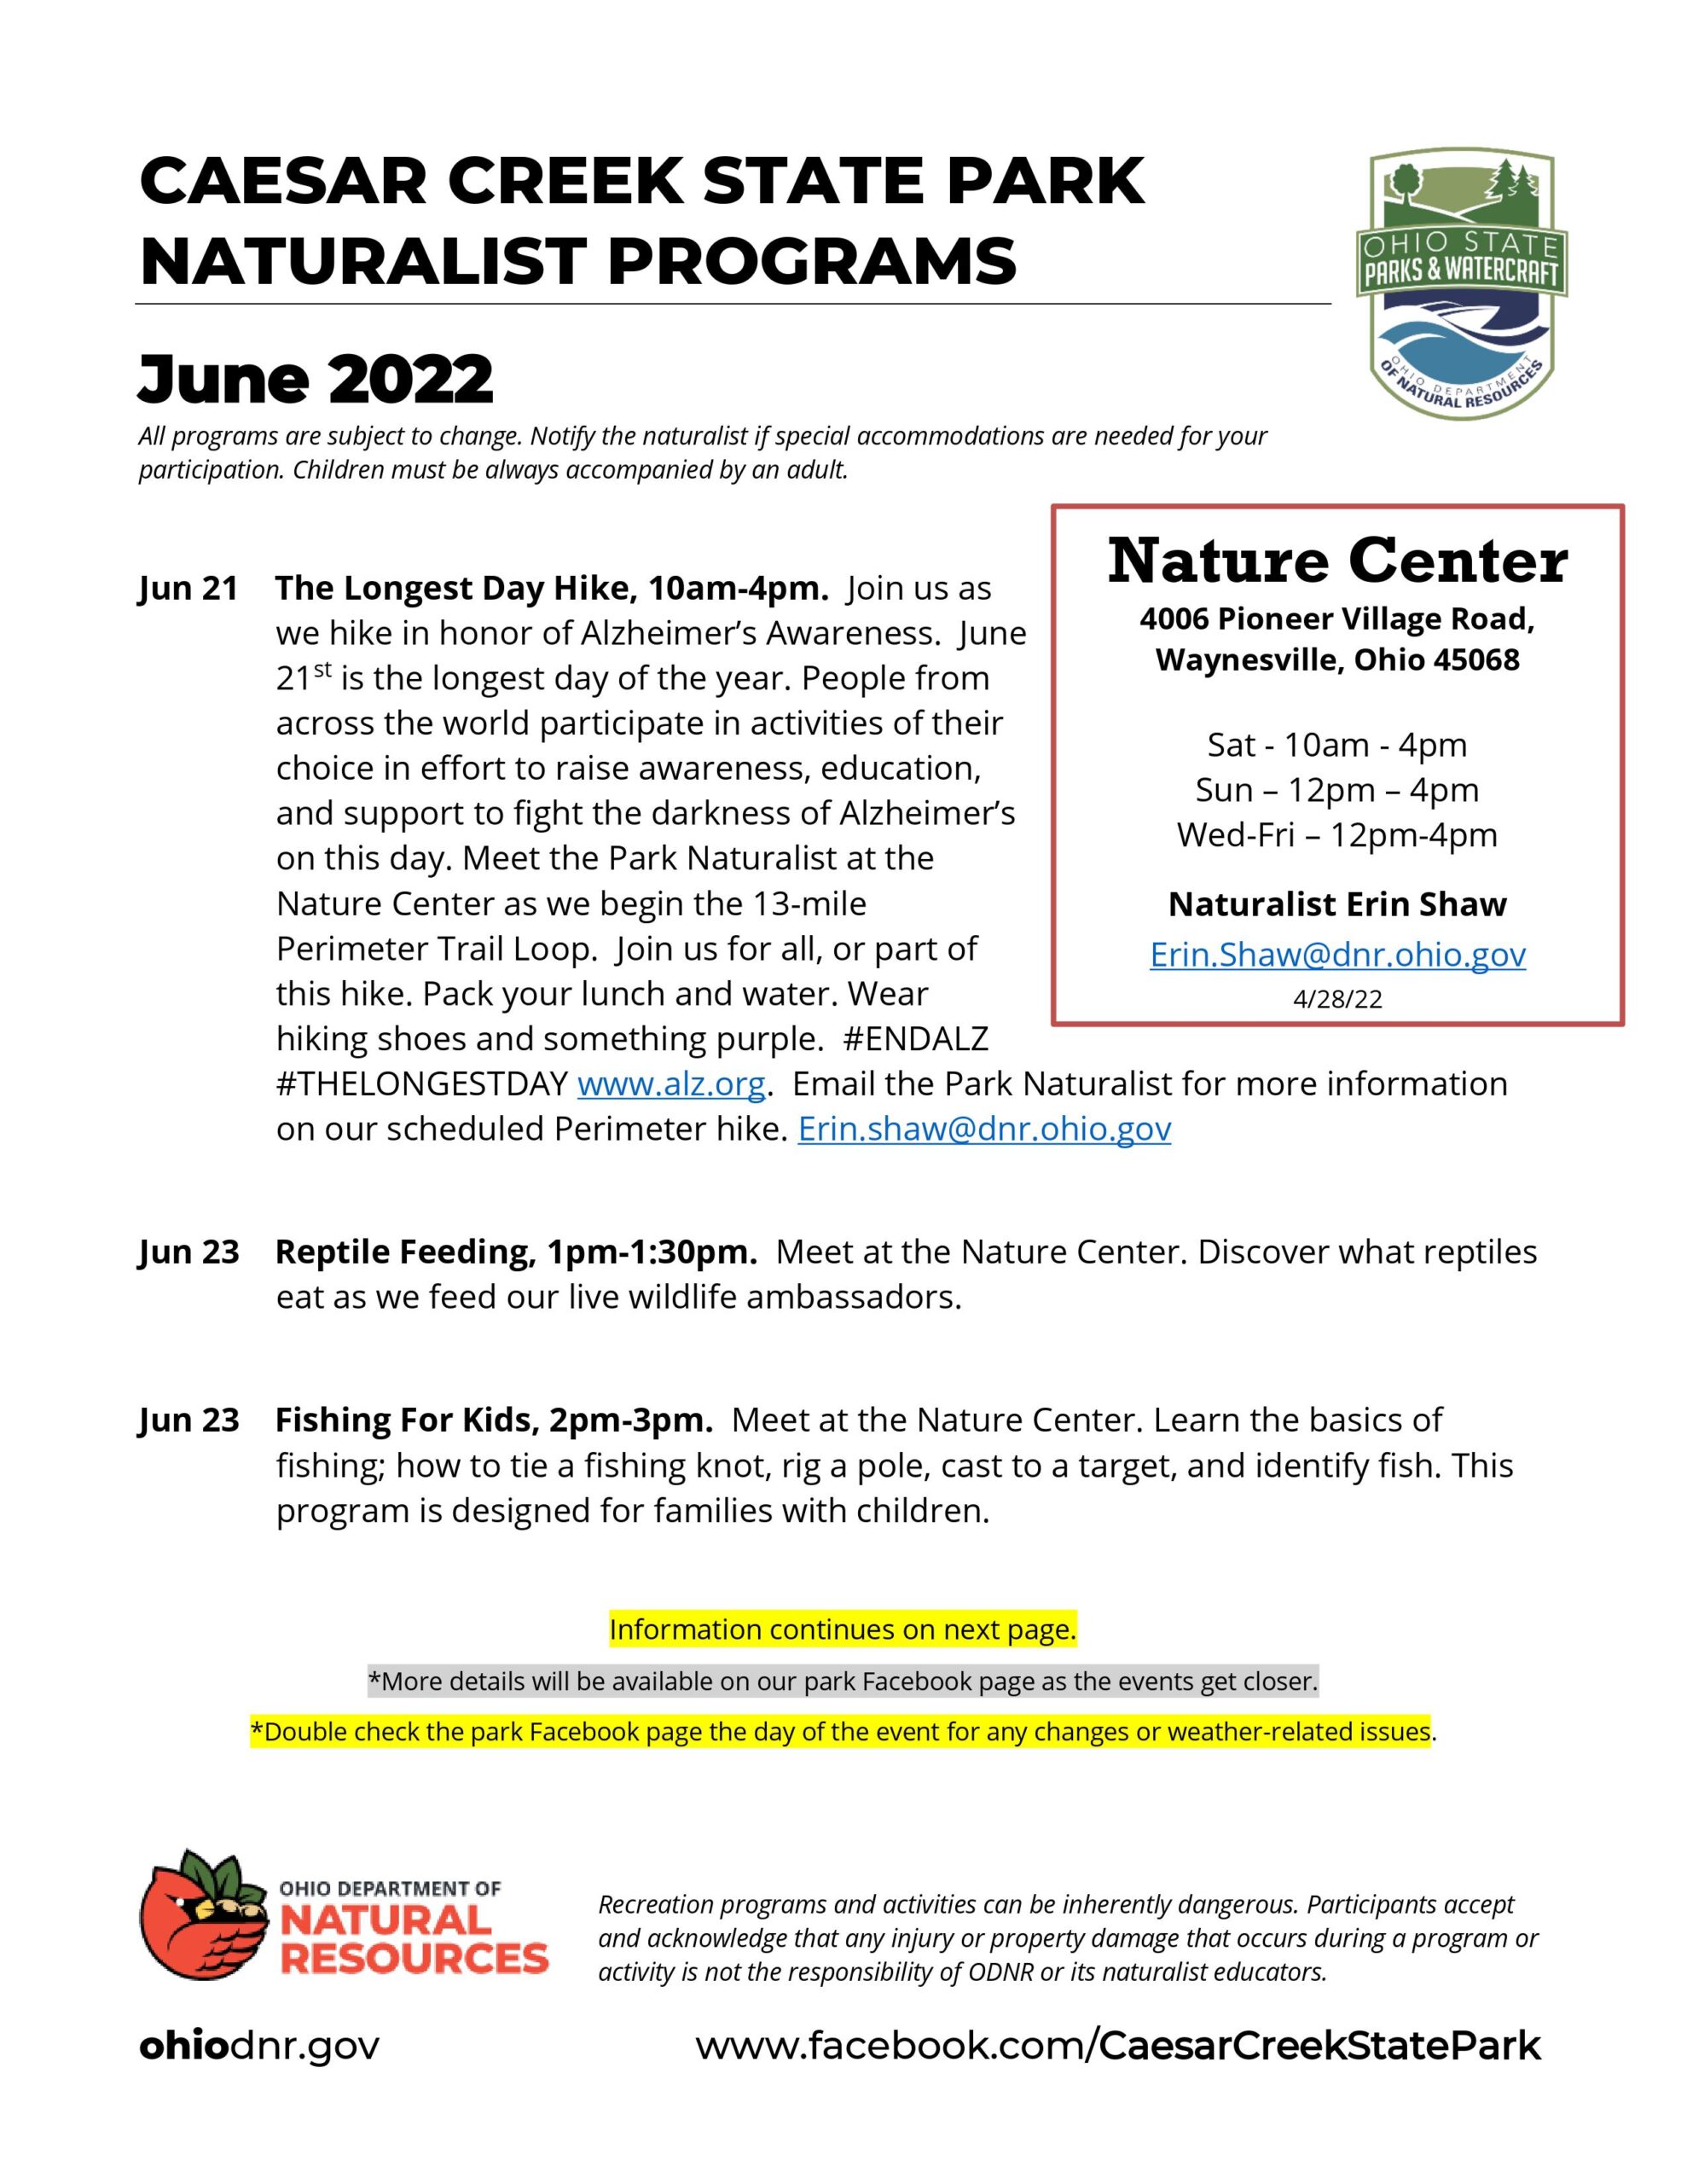 June 2022 Programs6